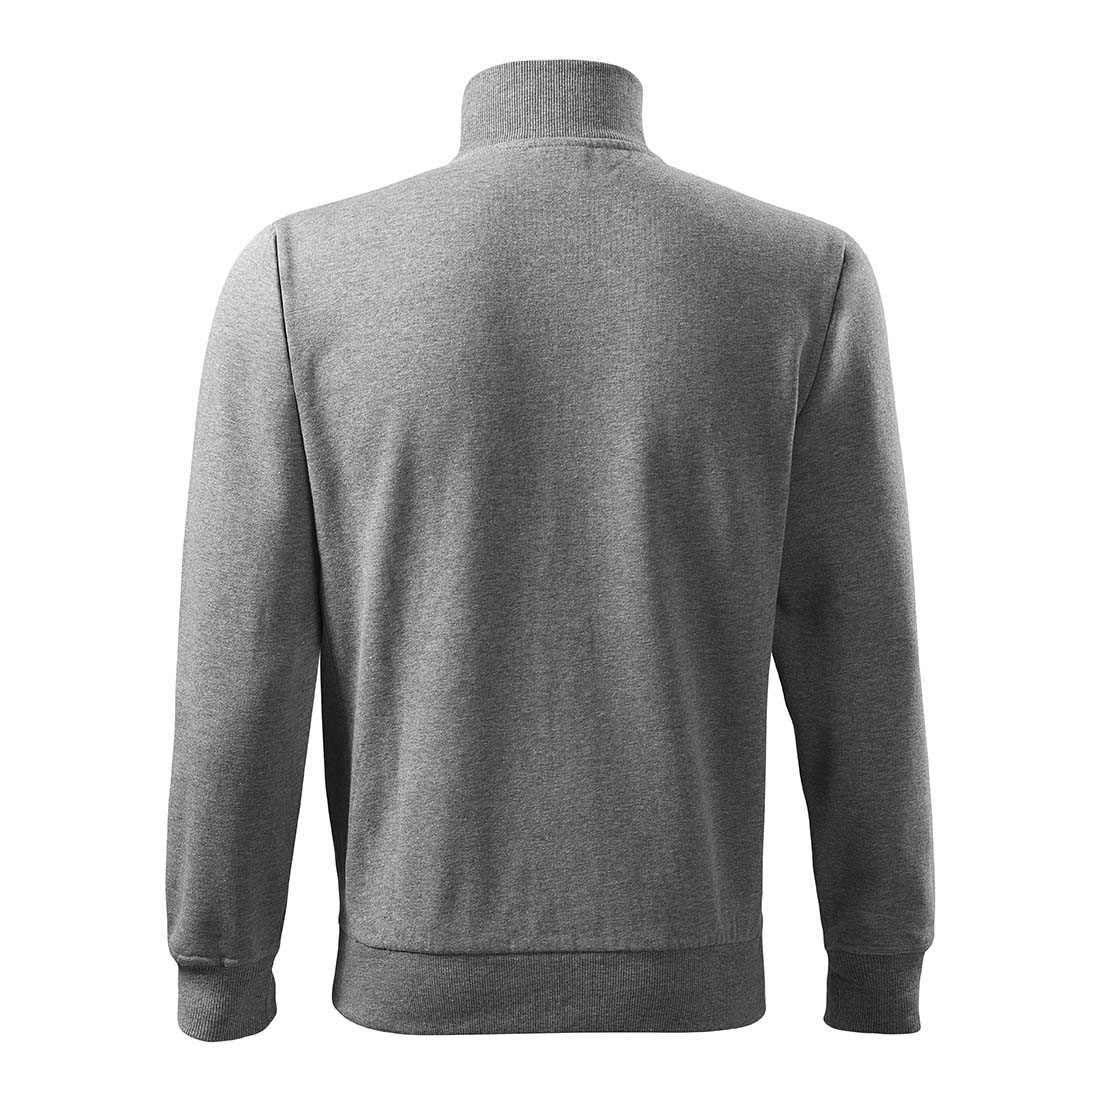 Sweatshirt men’s - Safetywear